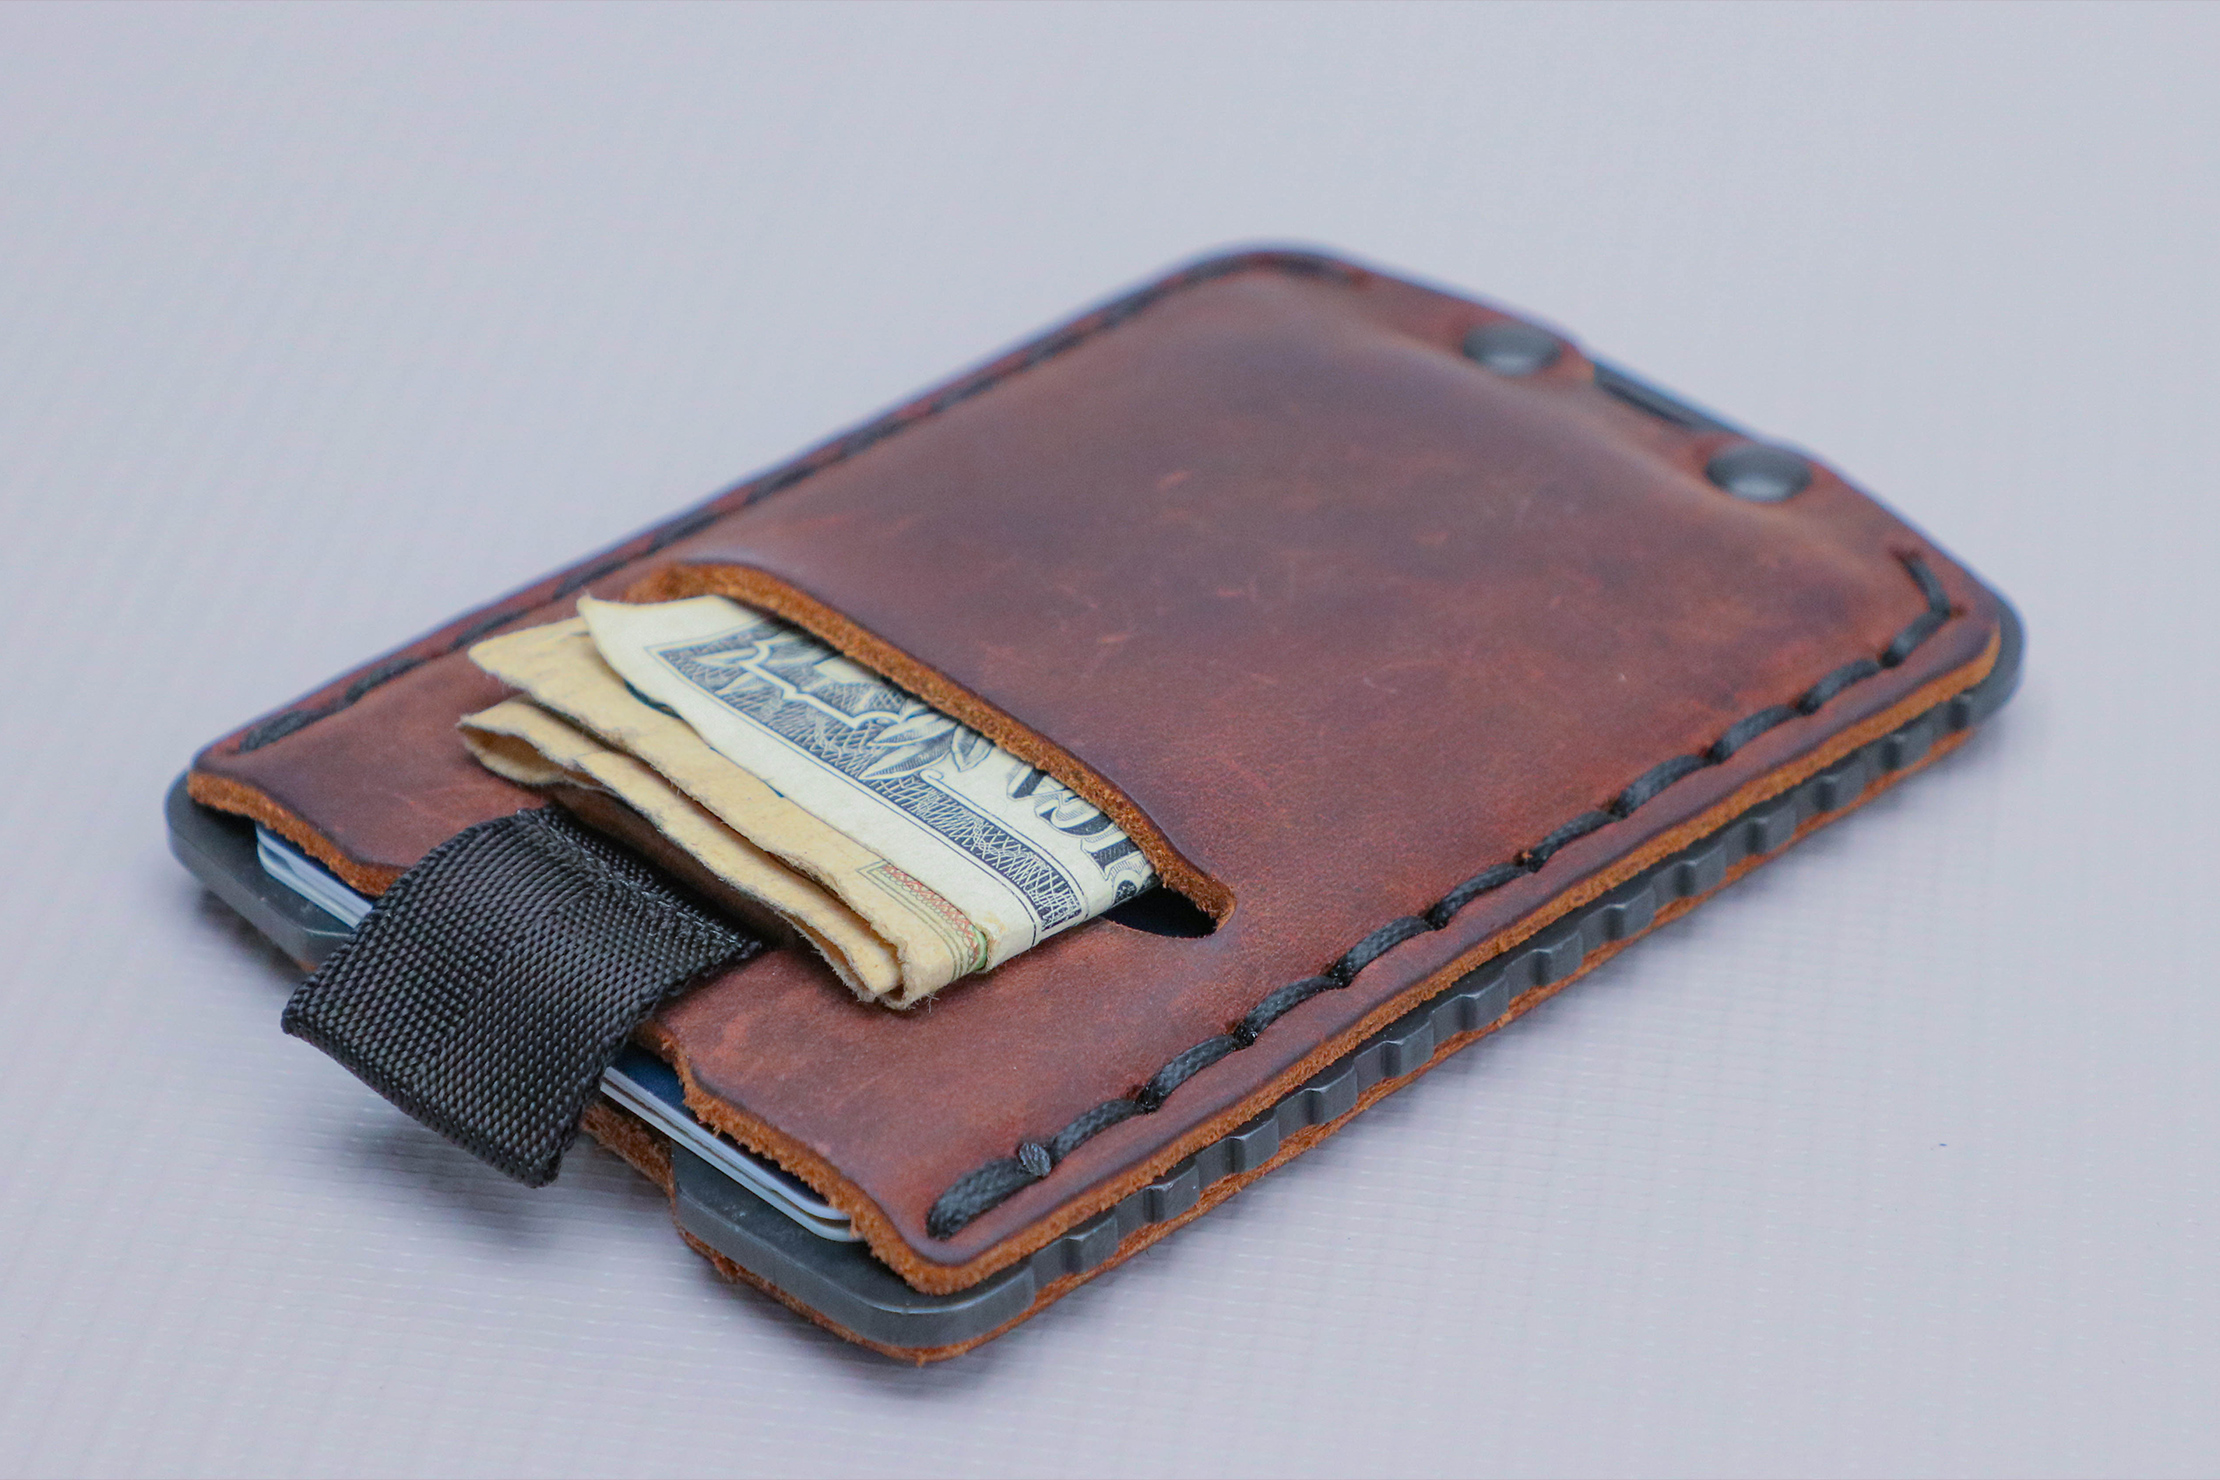 Trayvax Ascent Wallet Back Pocket Closeup